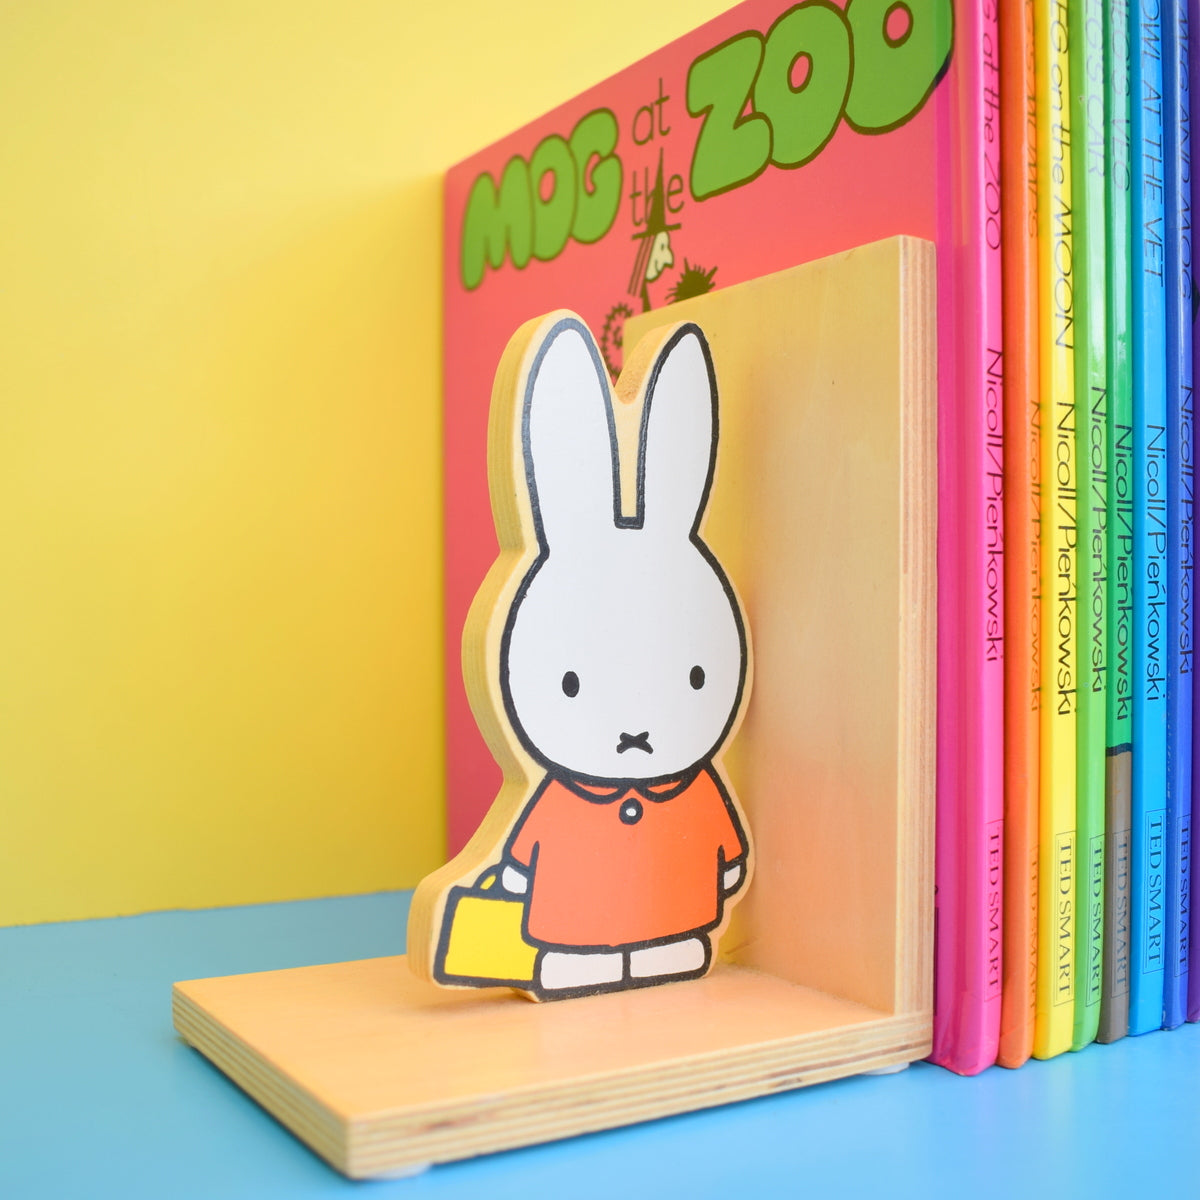 Retro Book Ends & Bag - Miffy Bunny - Dick Bruna - Wooden - Orange